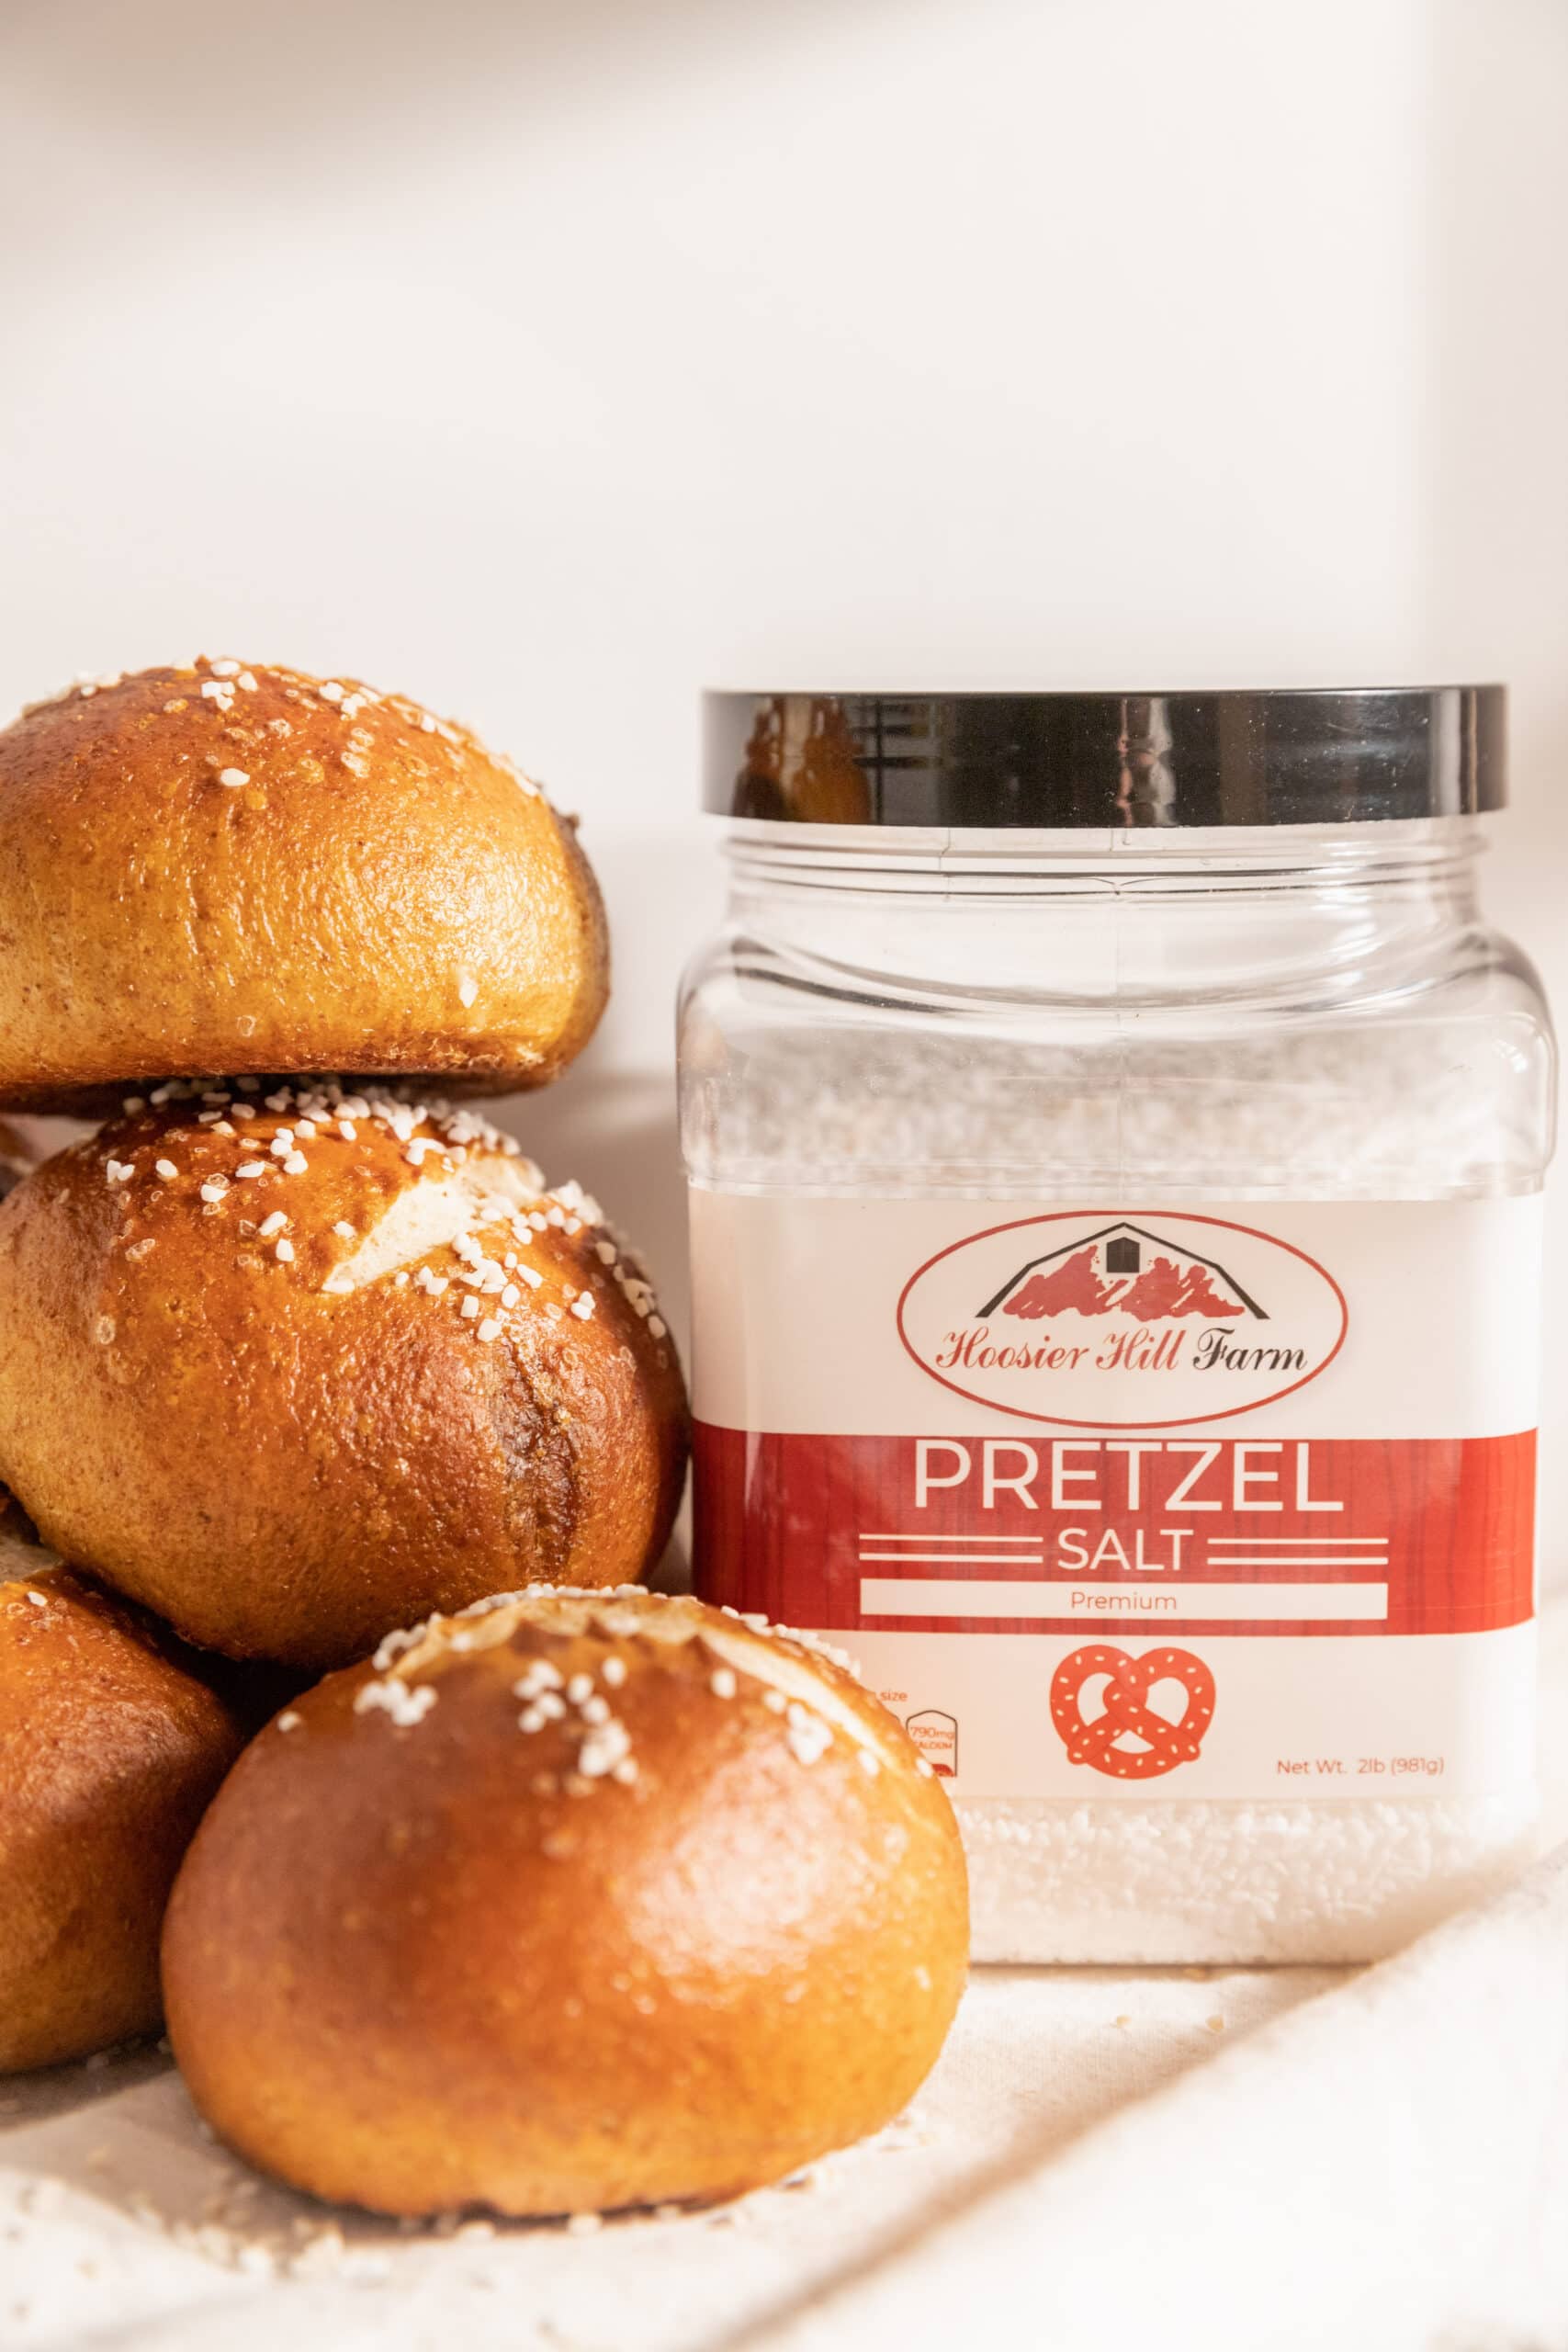 Side view of stacked pretzel rolls next to a container of Hoosier Hill Farm Pretzel Salt. 